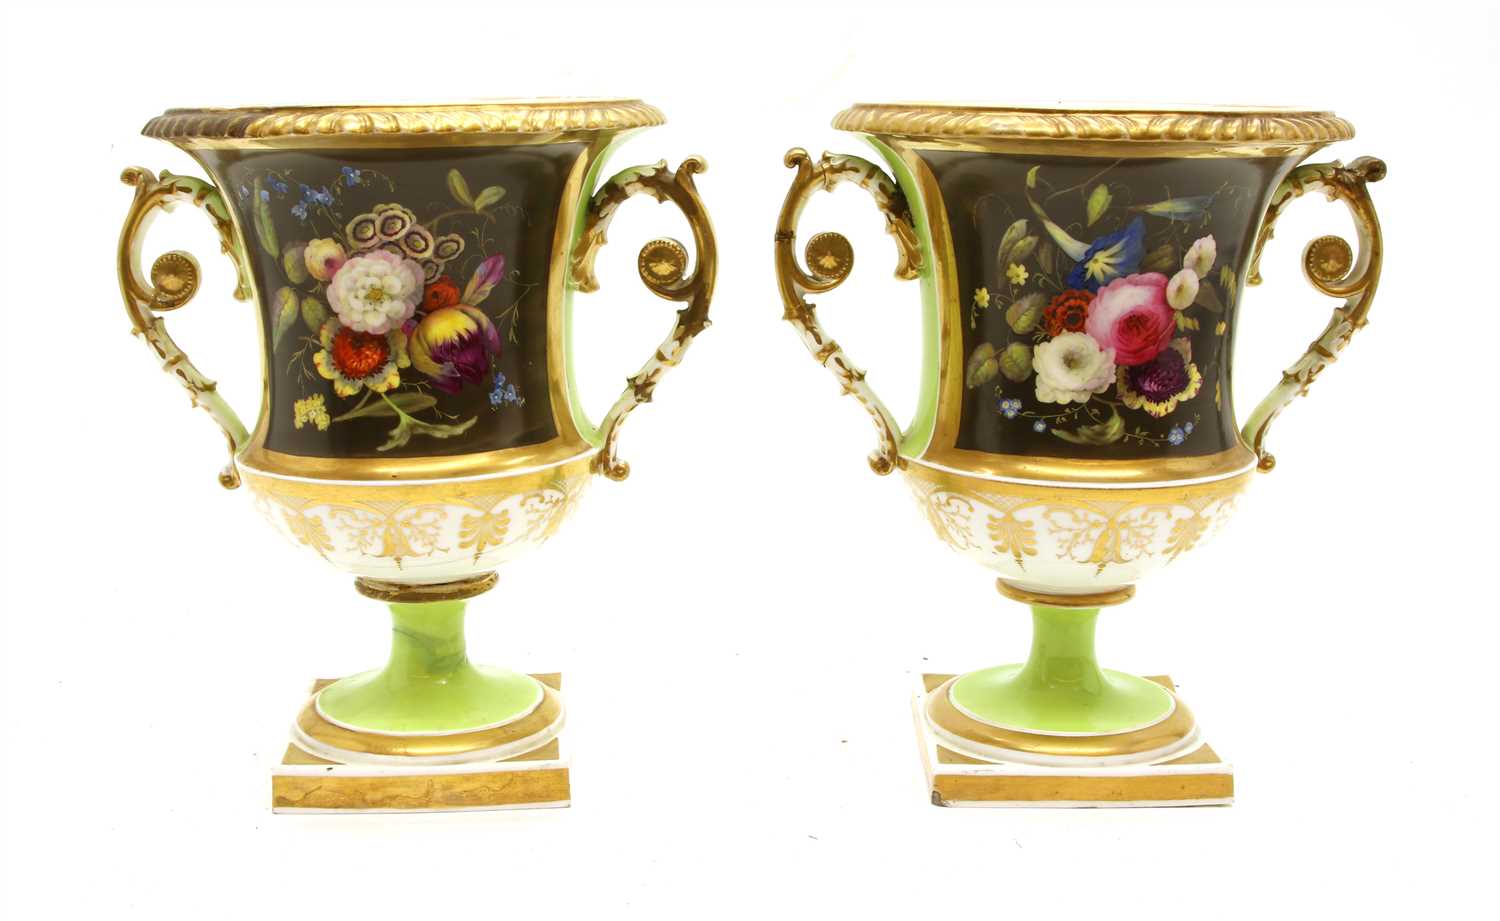 Lot 361 - A pair of Regency period porcelain Campana urns